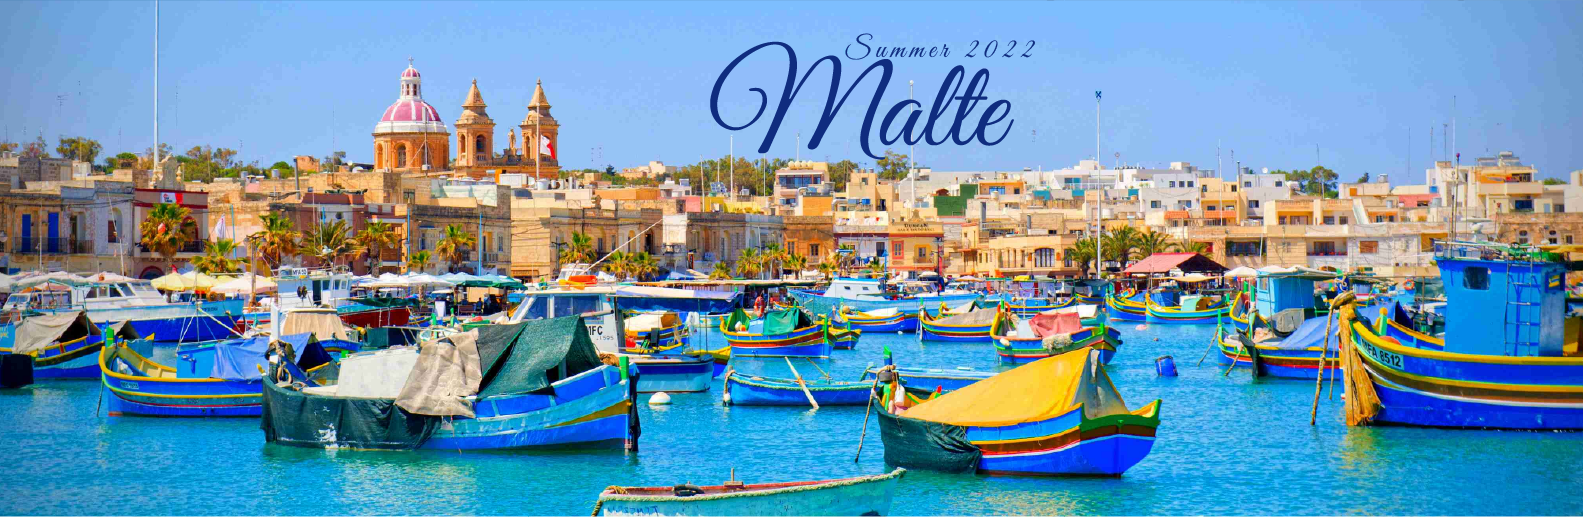 malte été 2022